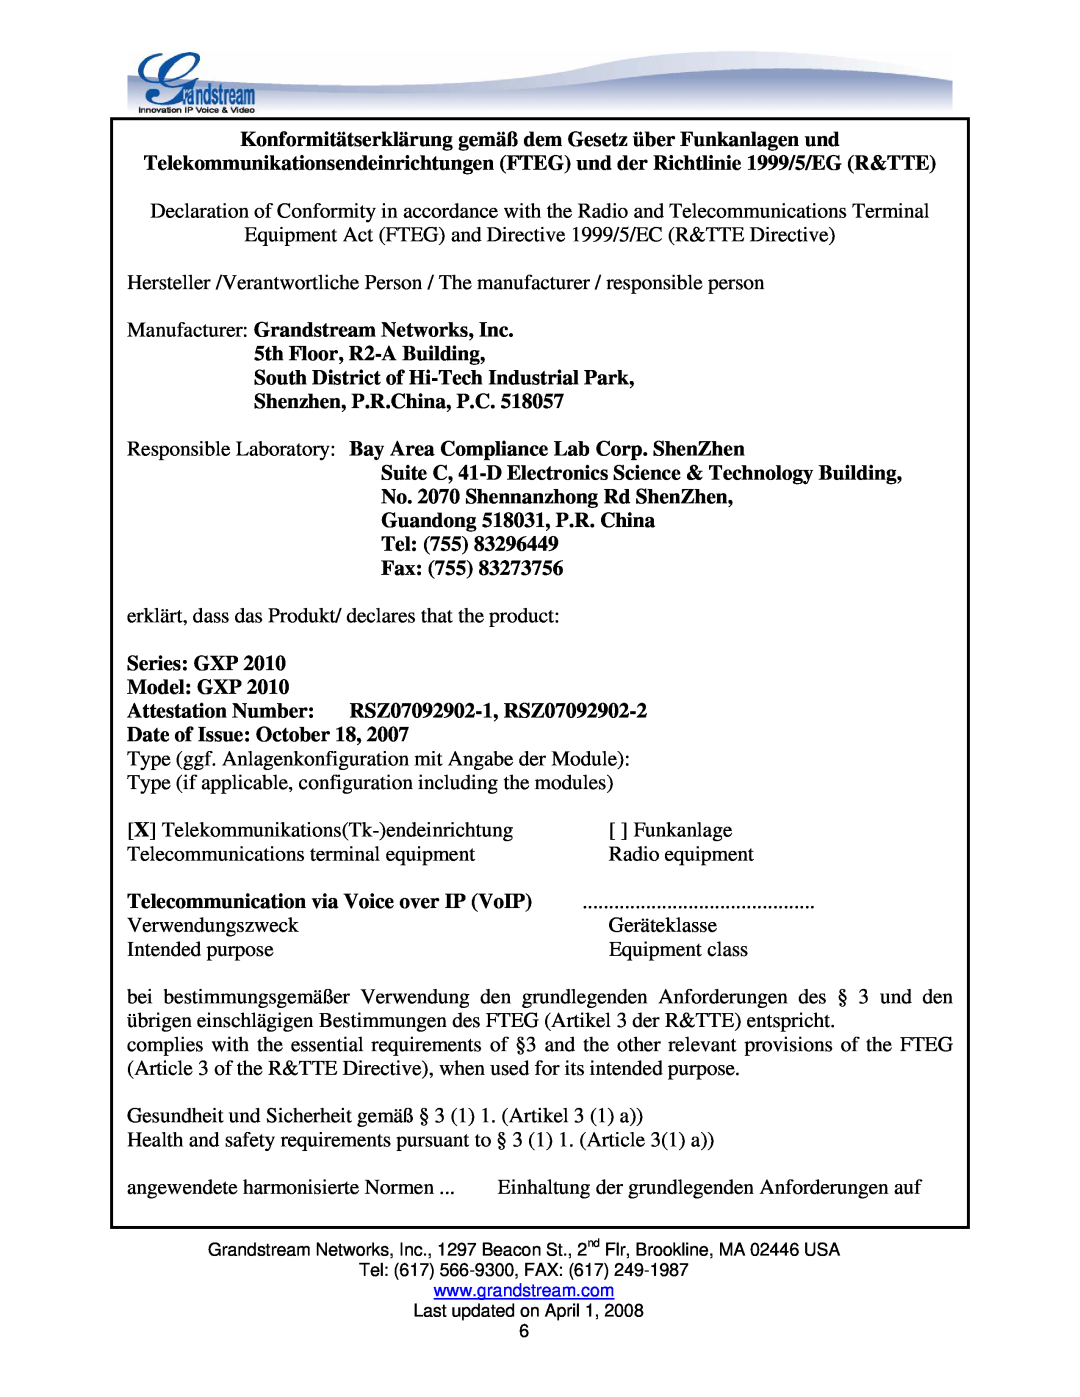 Grandstream Networks GXP2010 manual Konformitätserklärung gemäß dem Gesetz über Funkanlagen und 